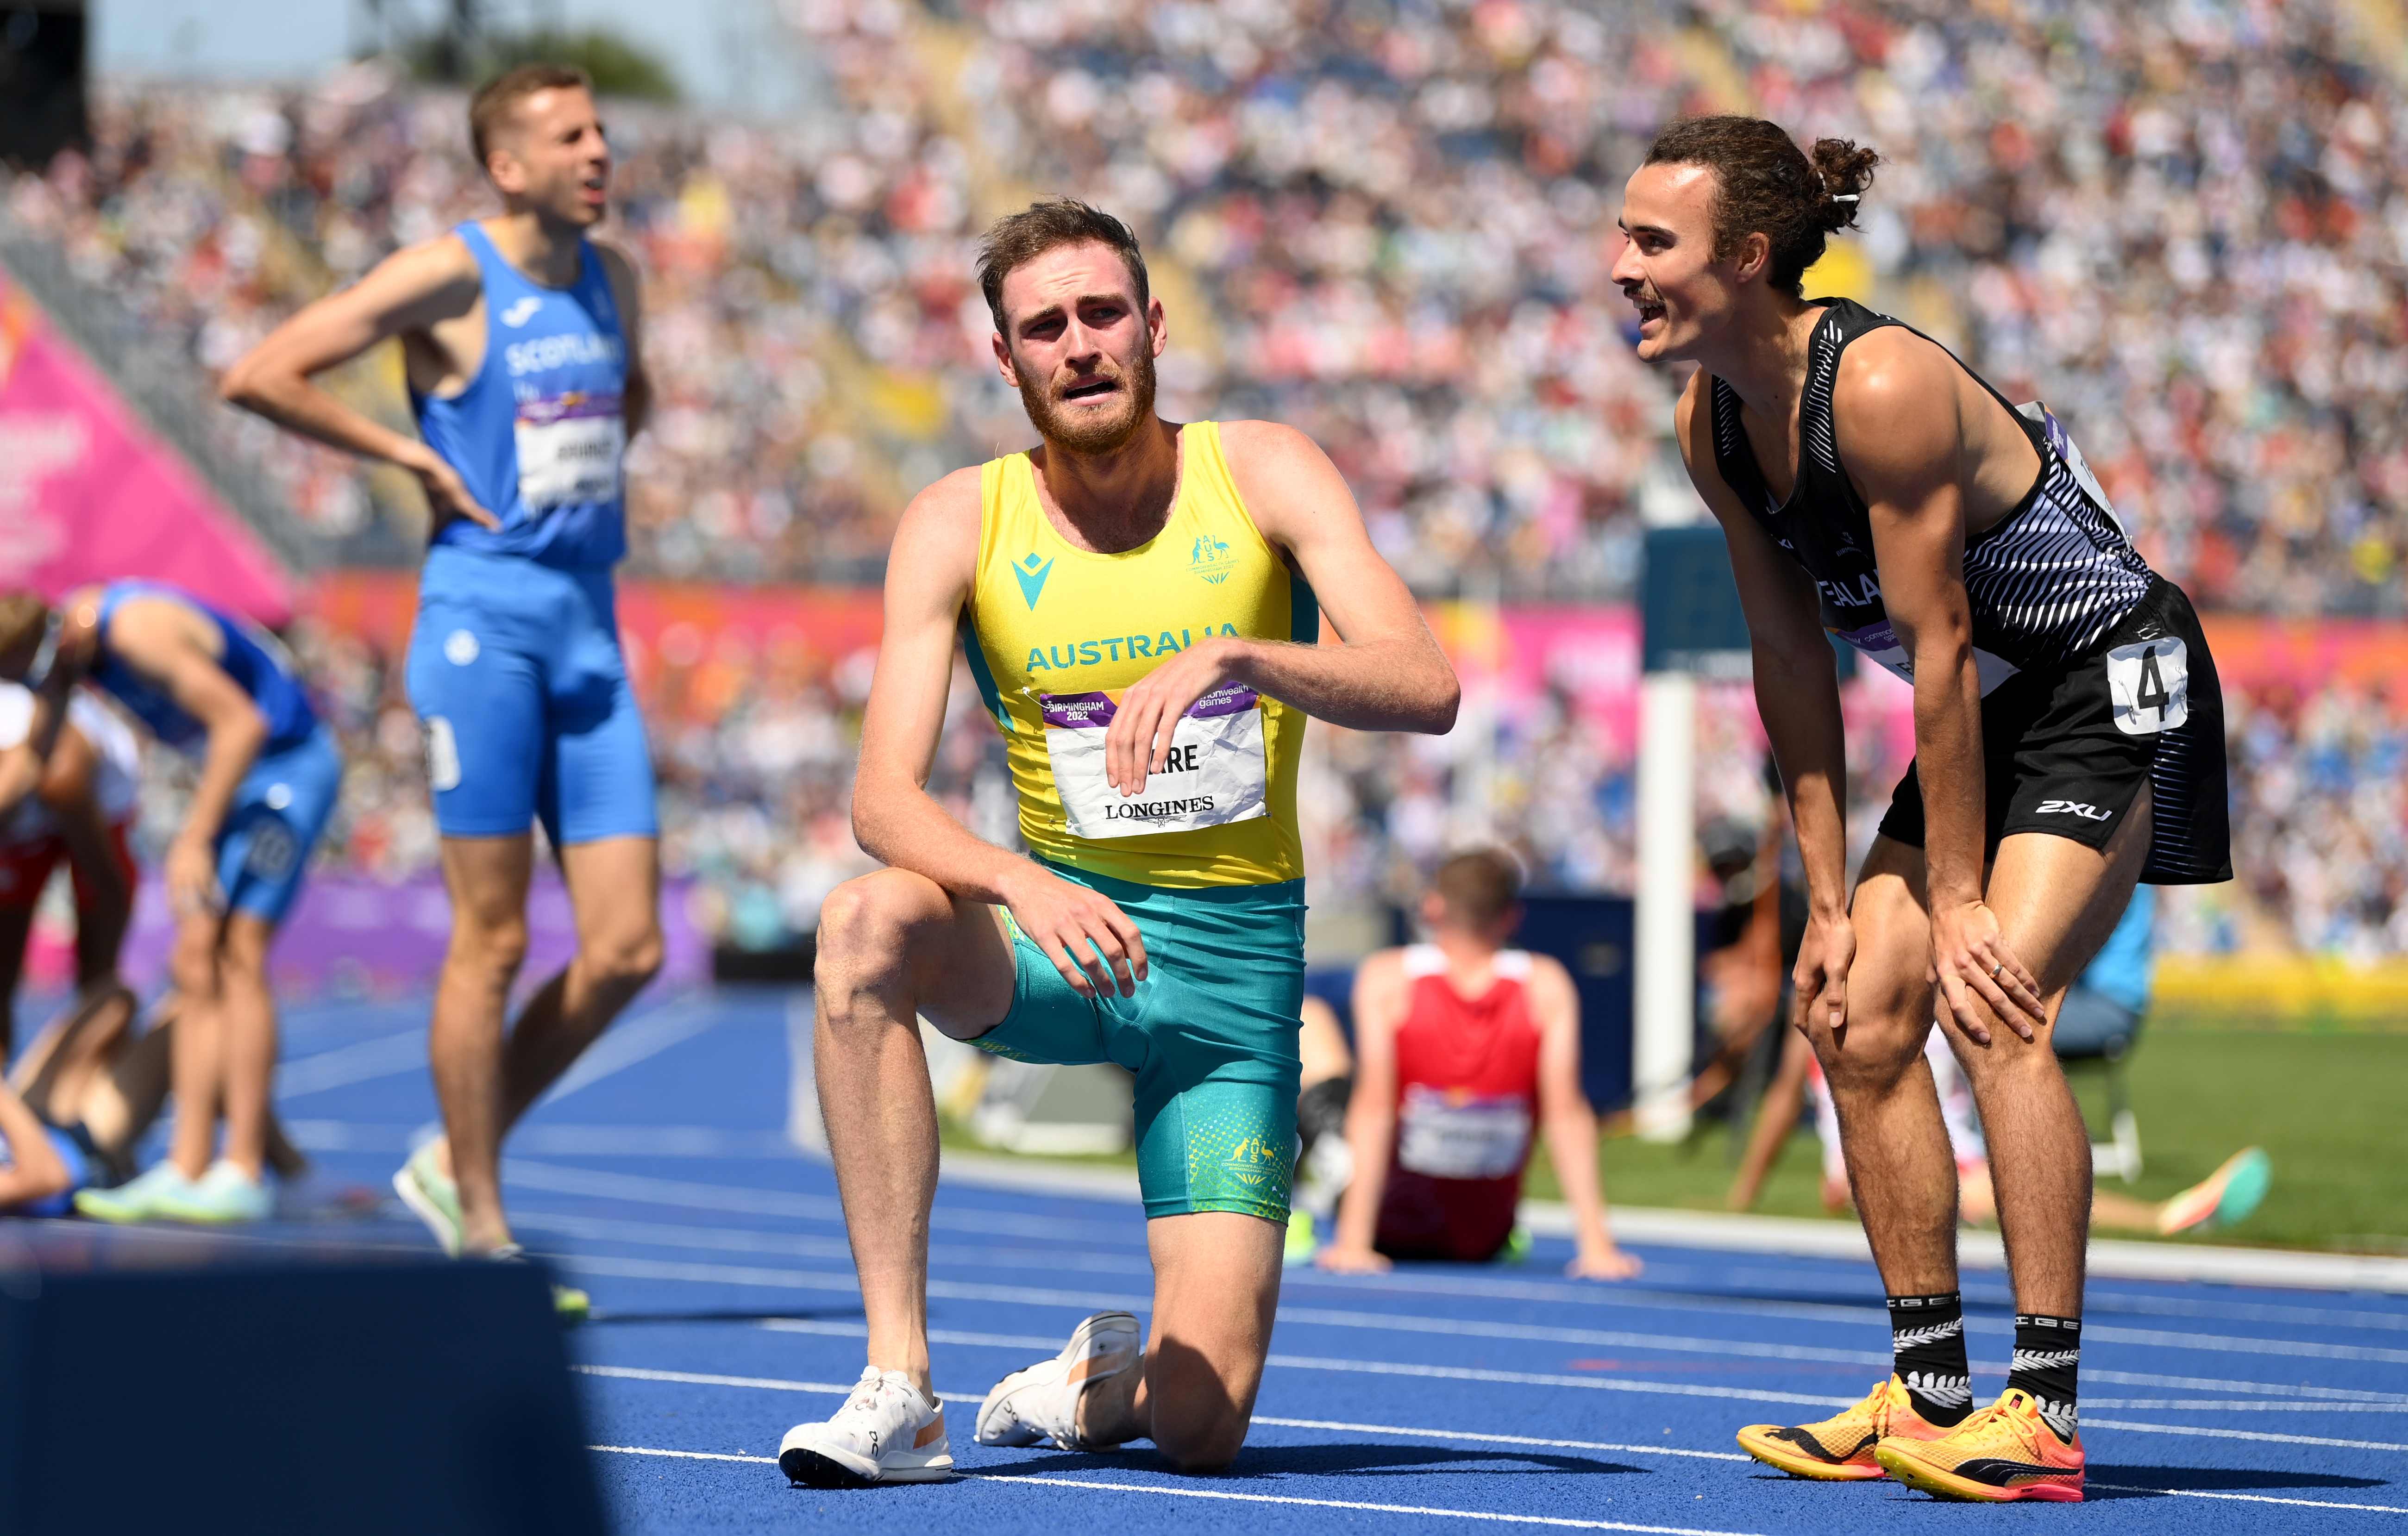 Oliver Hoare, 1500m gold, race, results, winner, Australian, interview